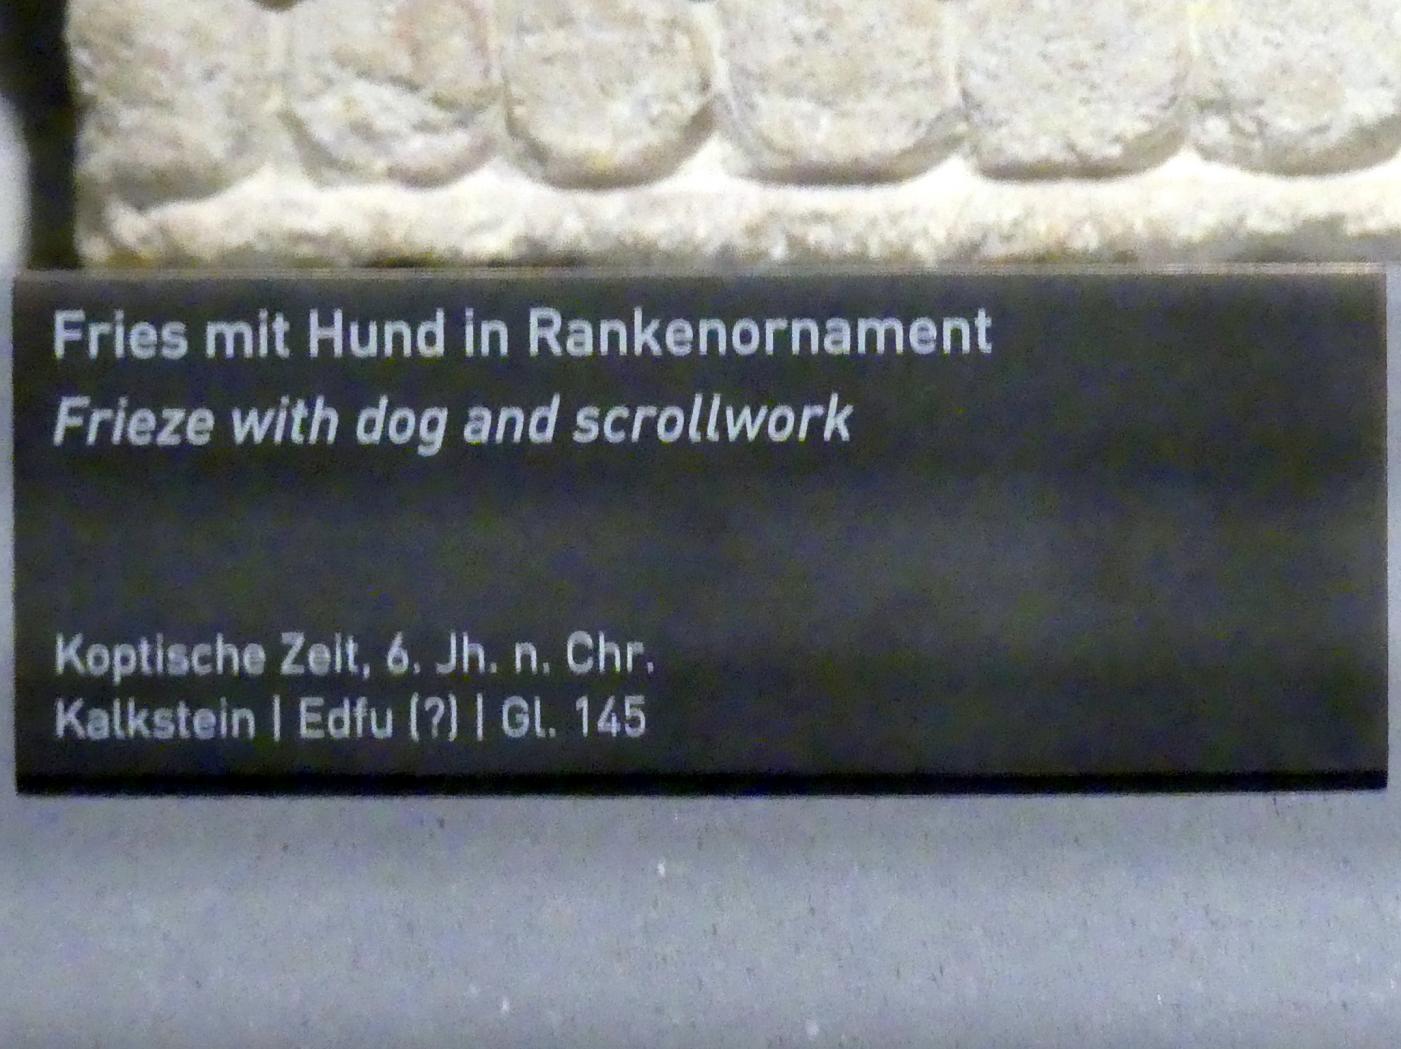 Fries mit Hund in Rankenornament, Koptische Zeit, 200 - 800, 500 - 600, Bild 2/2